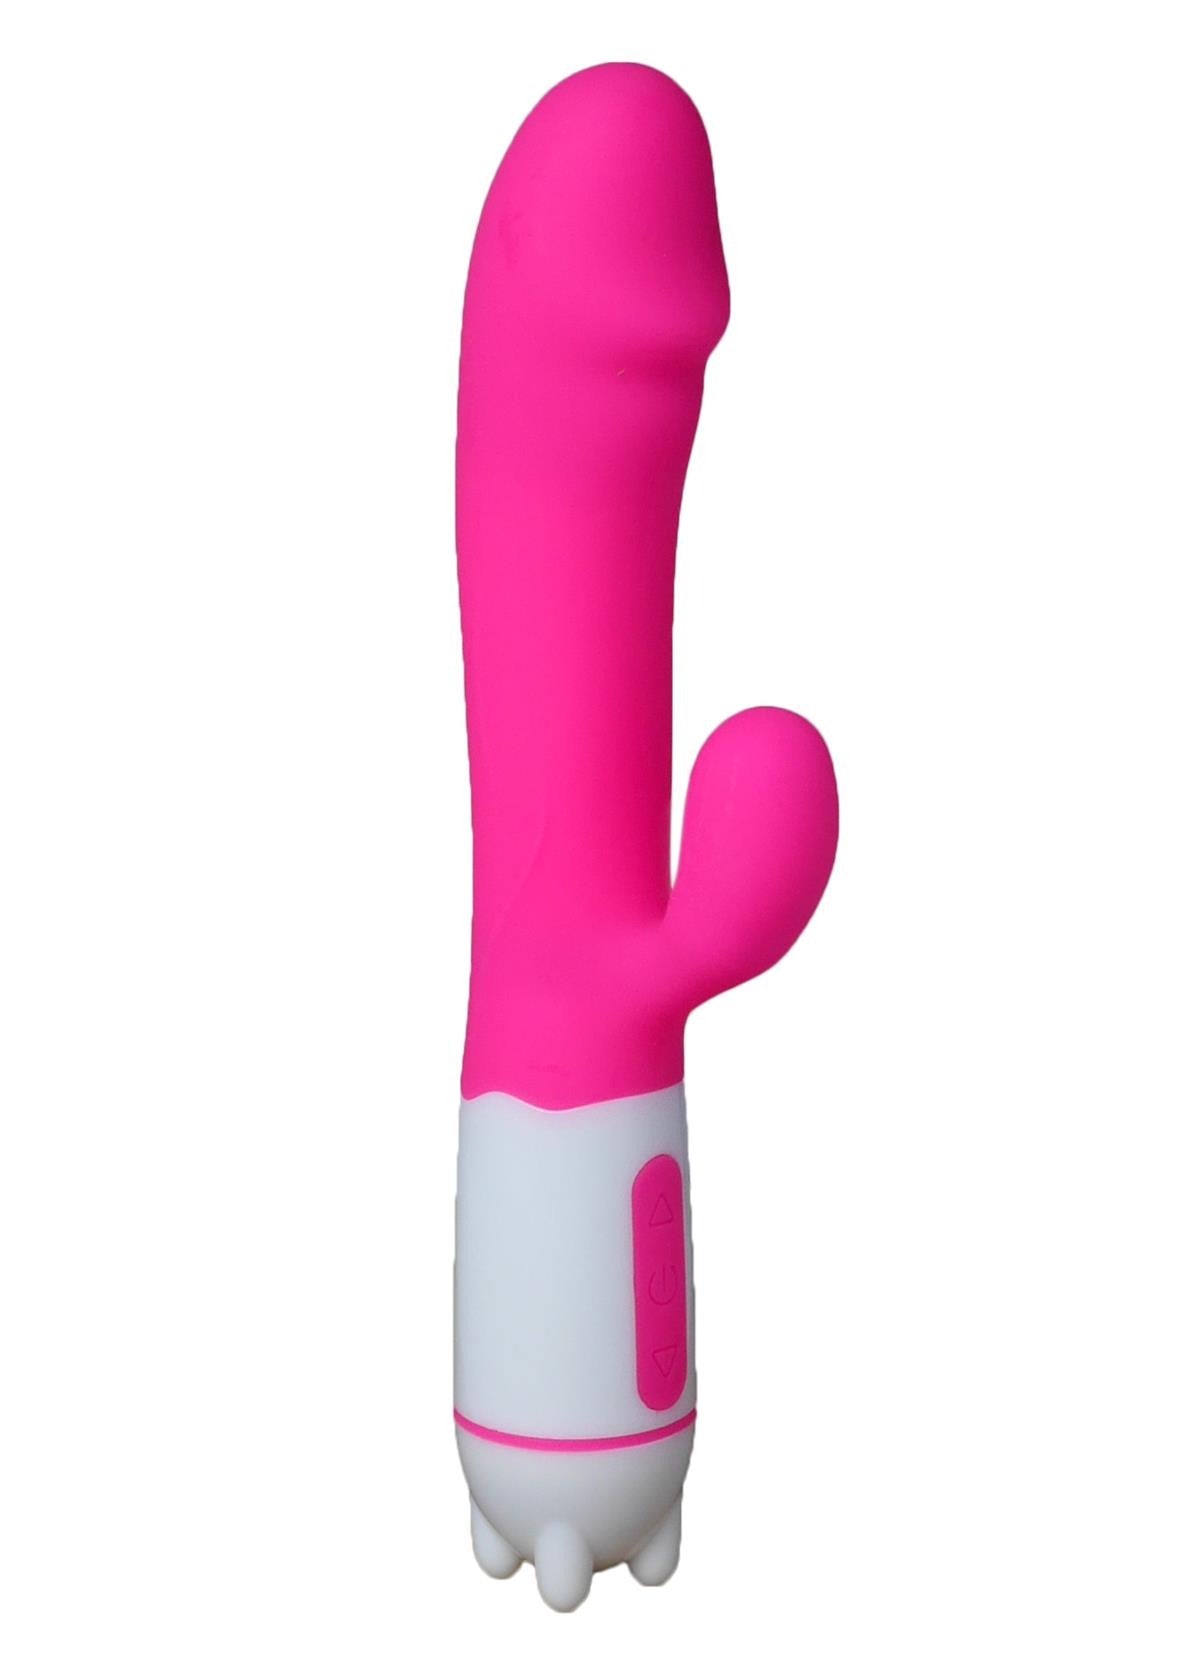 Bossoftoys - 26-00124 - Emma - G spot & clit stimulator Vibrator - New Design - 19 cm  - 36 function - 5 speed - Pink - colour box